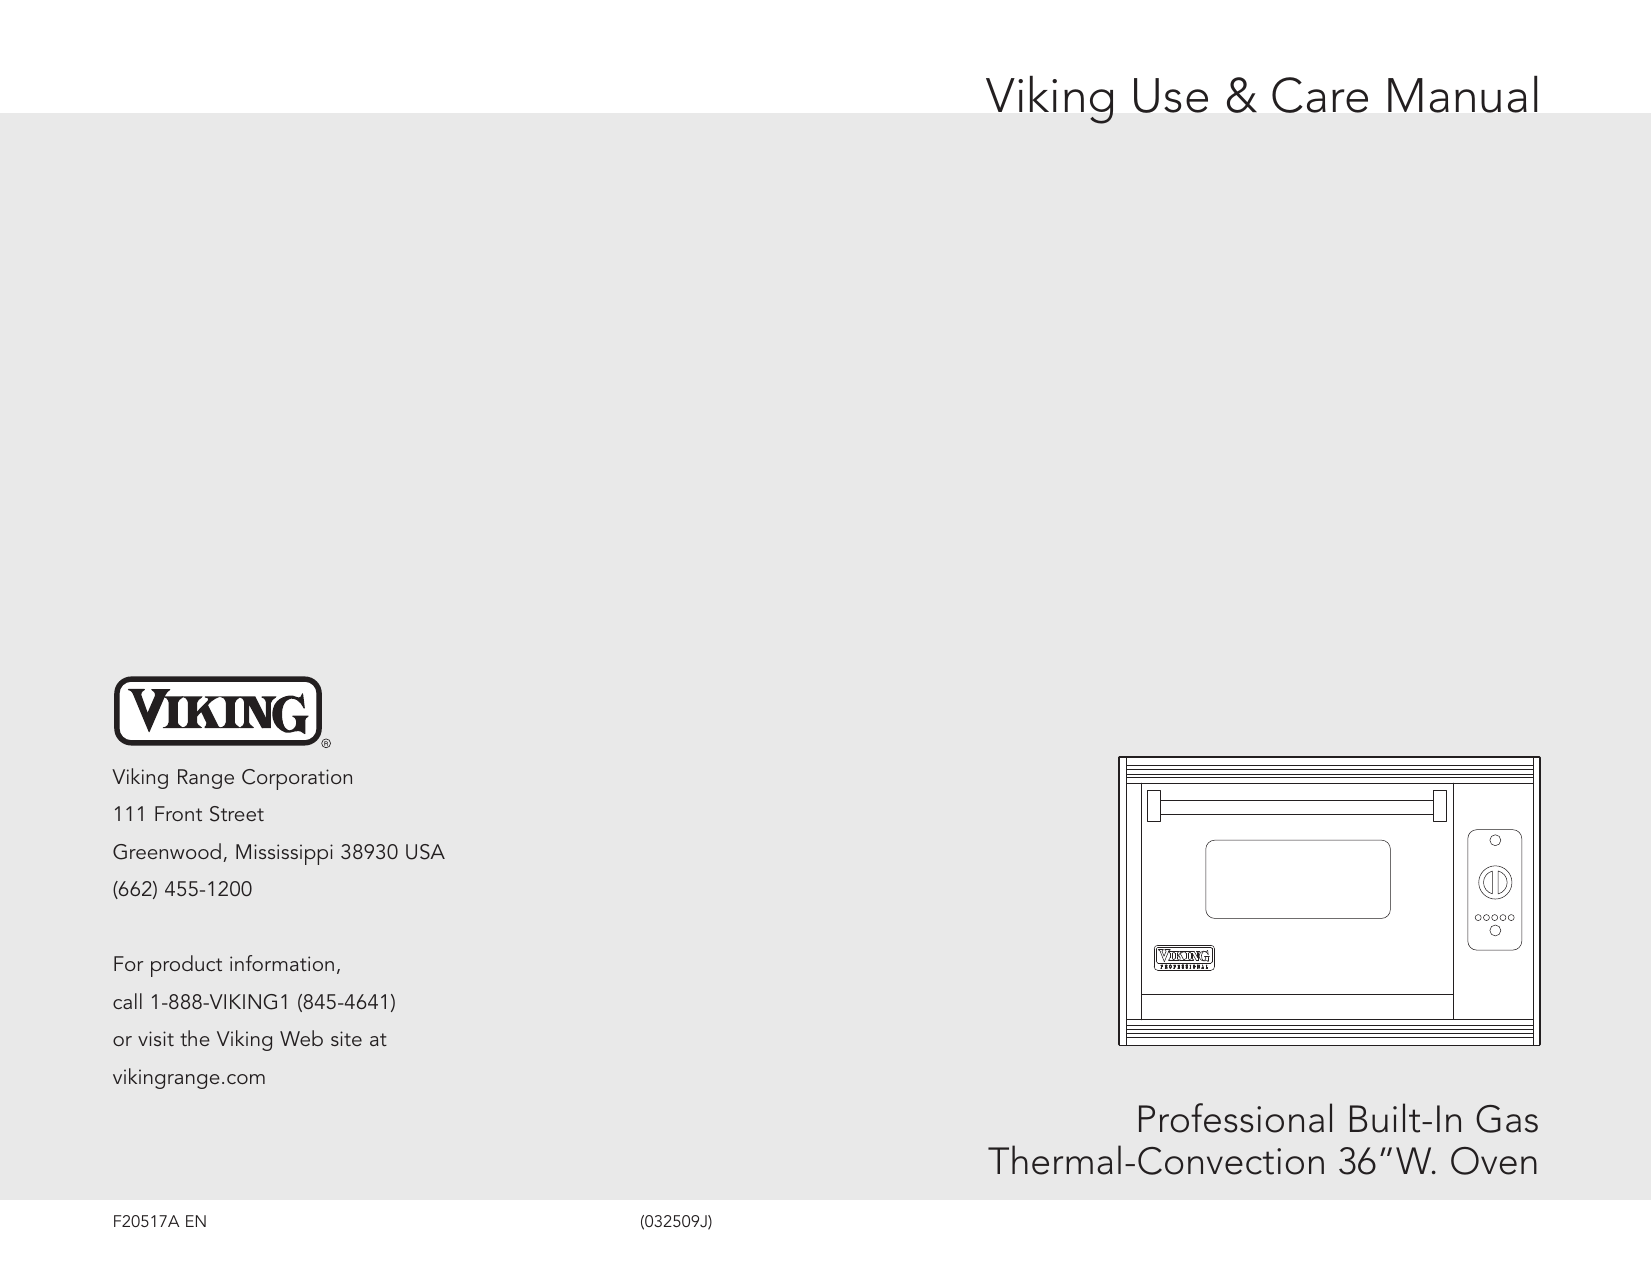 Yamaha Viking Professional Service Manual